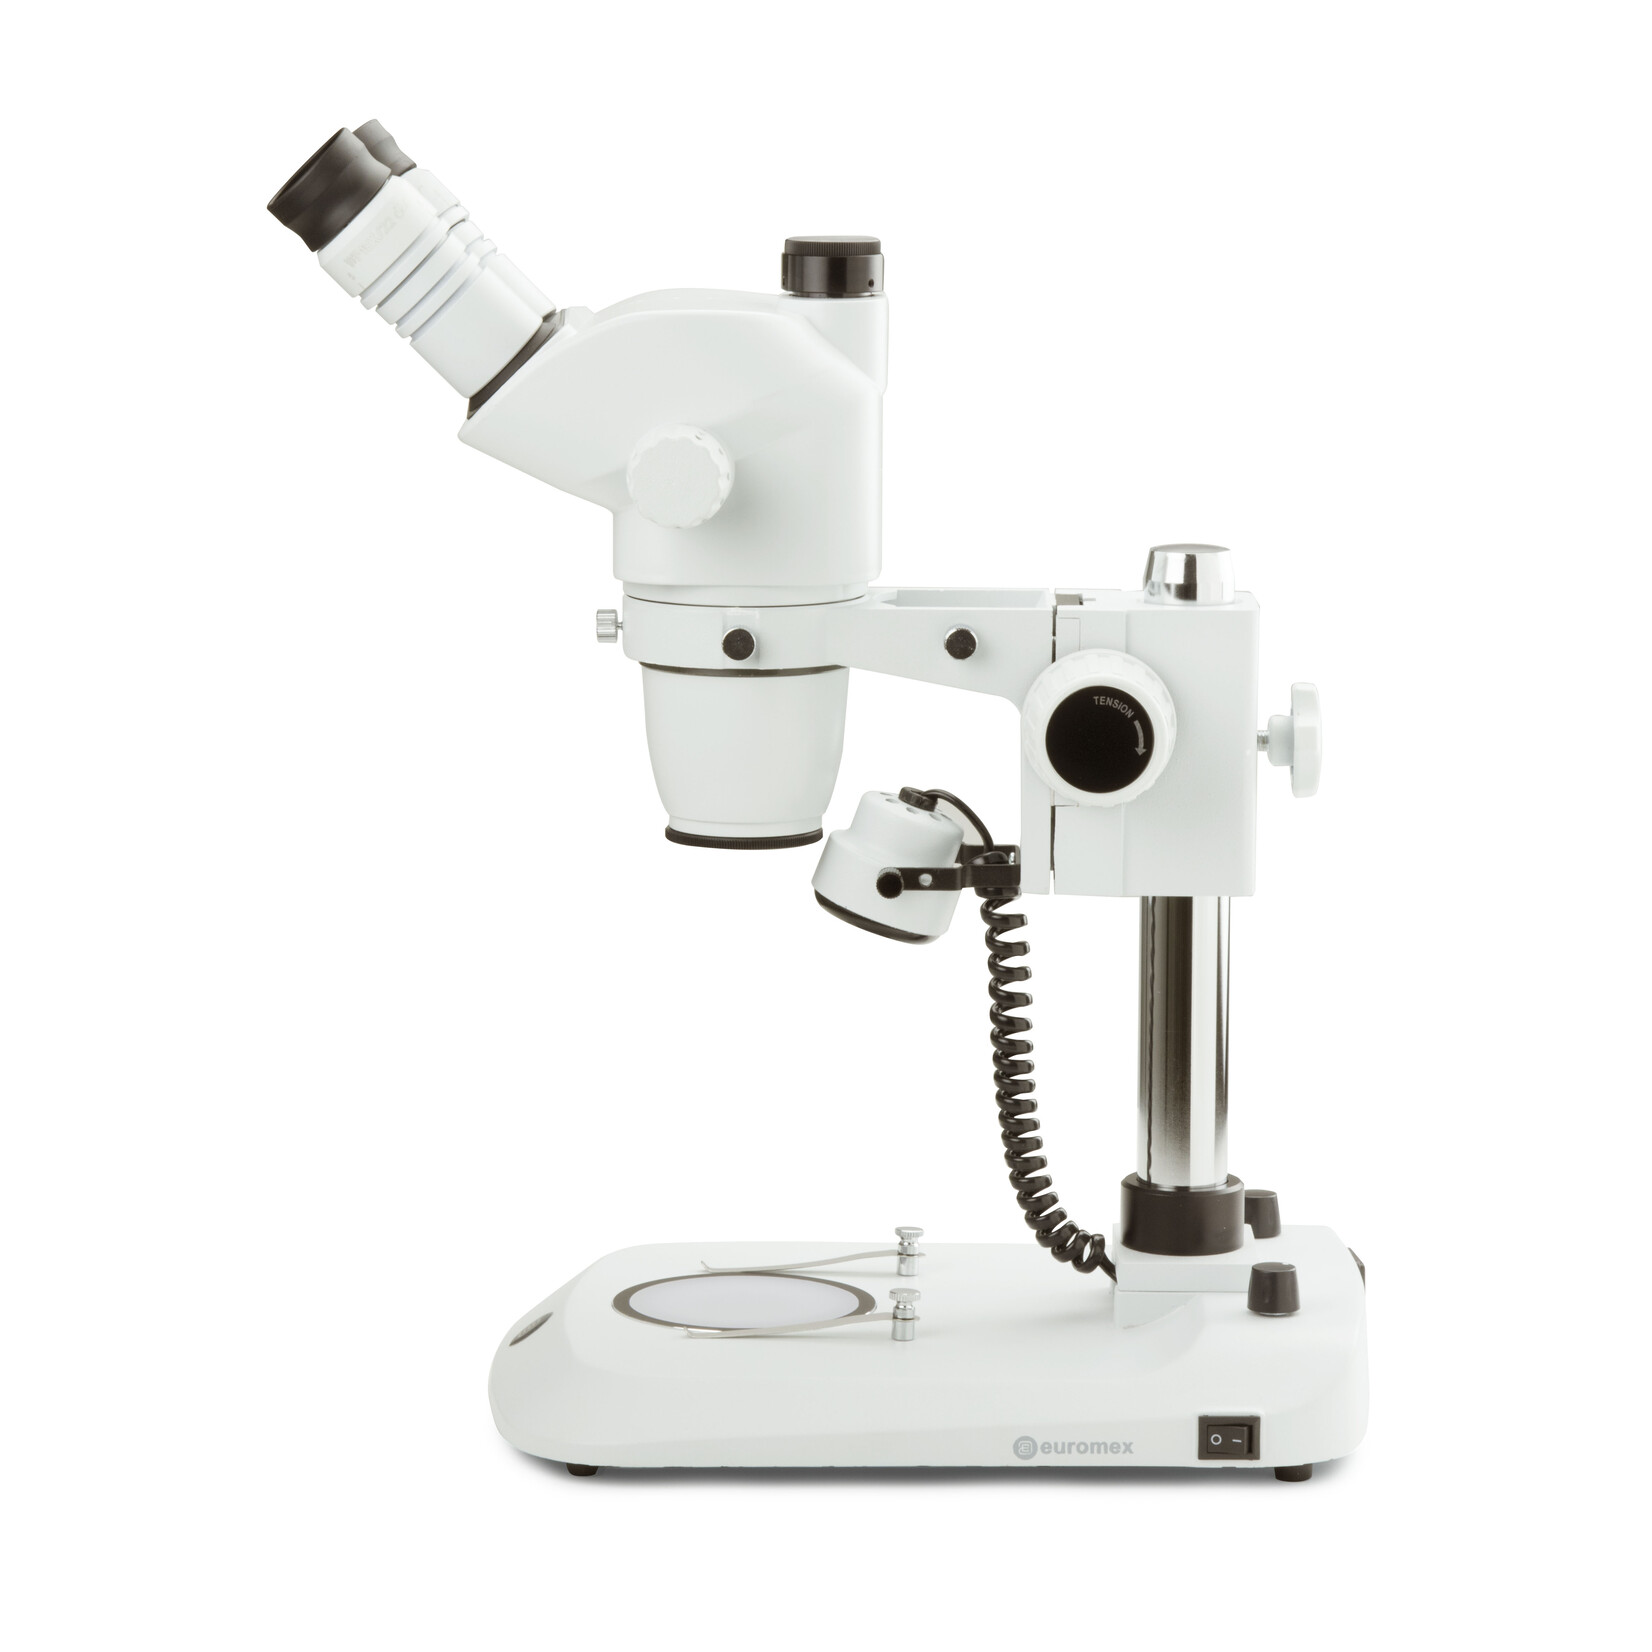 Microscopio estereoscópico trinocular con zoom NexiusZoom EVO, objetivo zoom de 0,65x a 5,5x